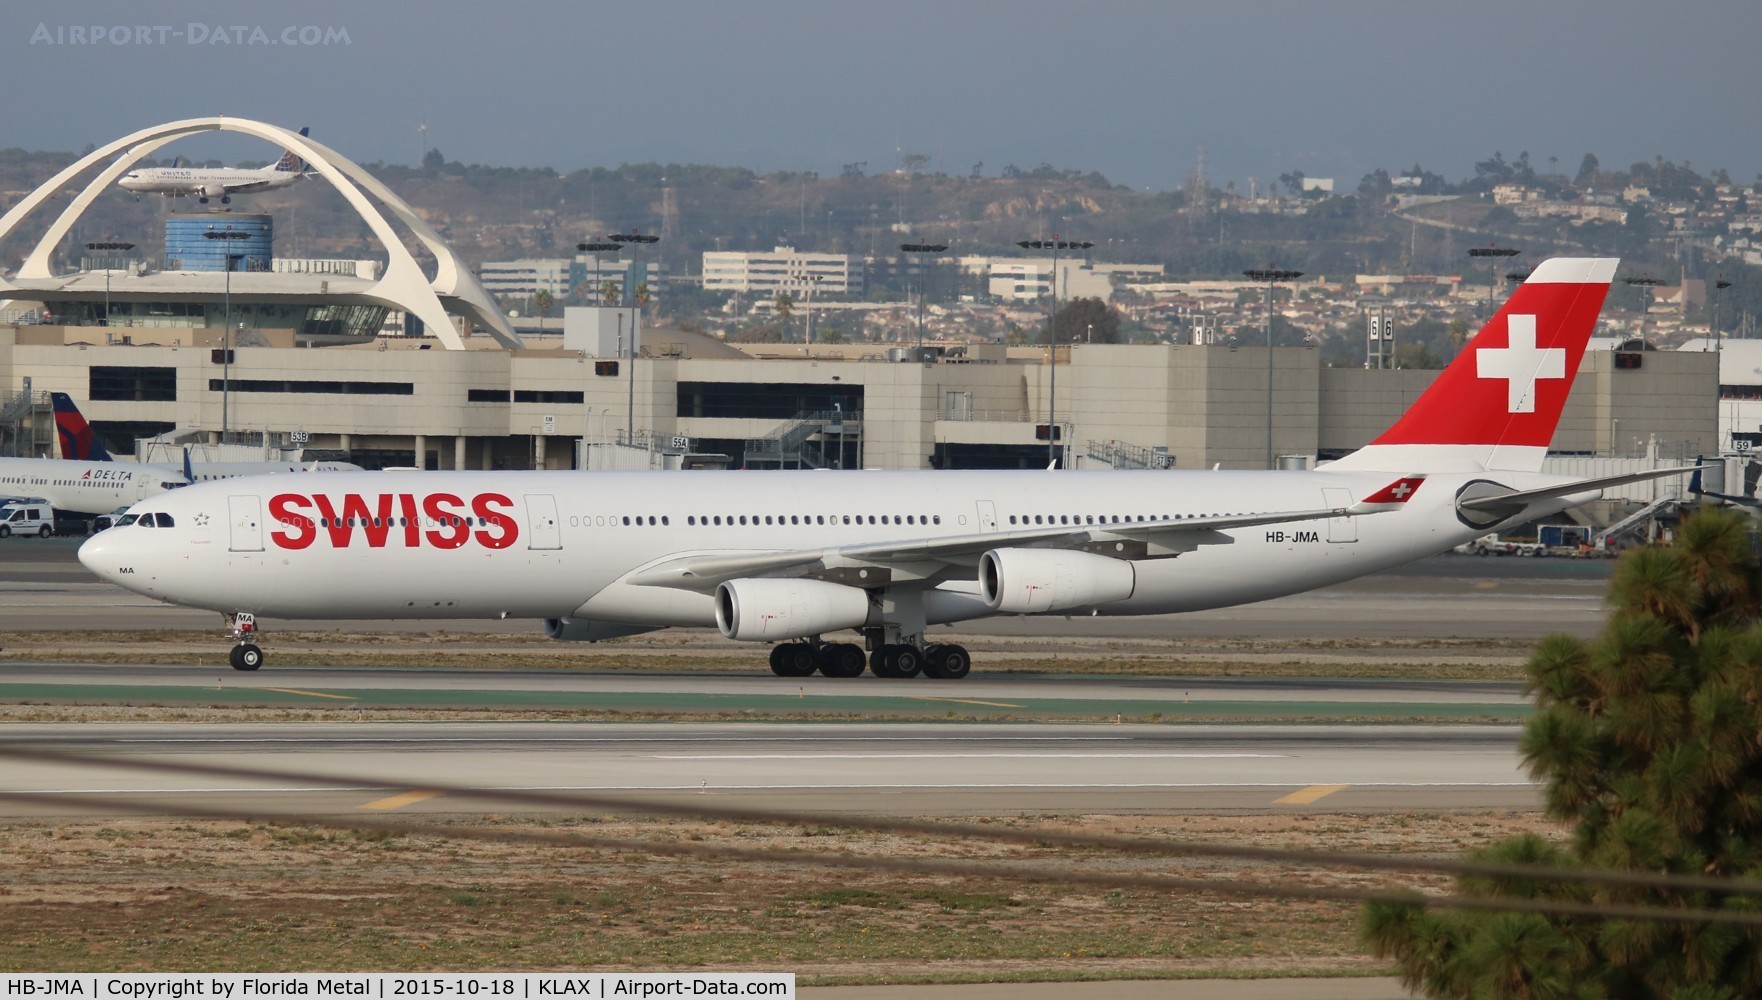 HB-JMA, 2003 Airbus A340-313 C/N 538, LAX 2015